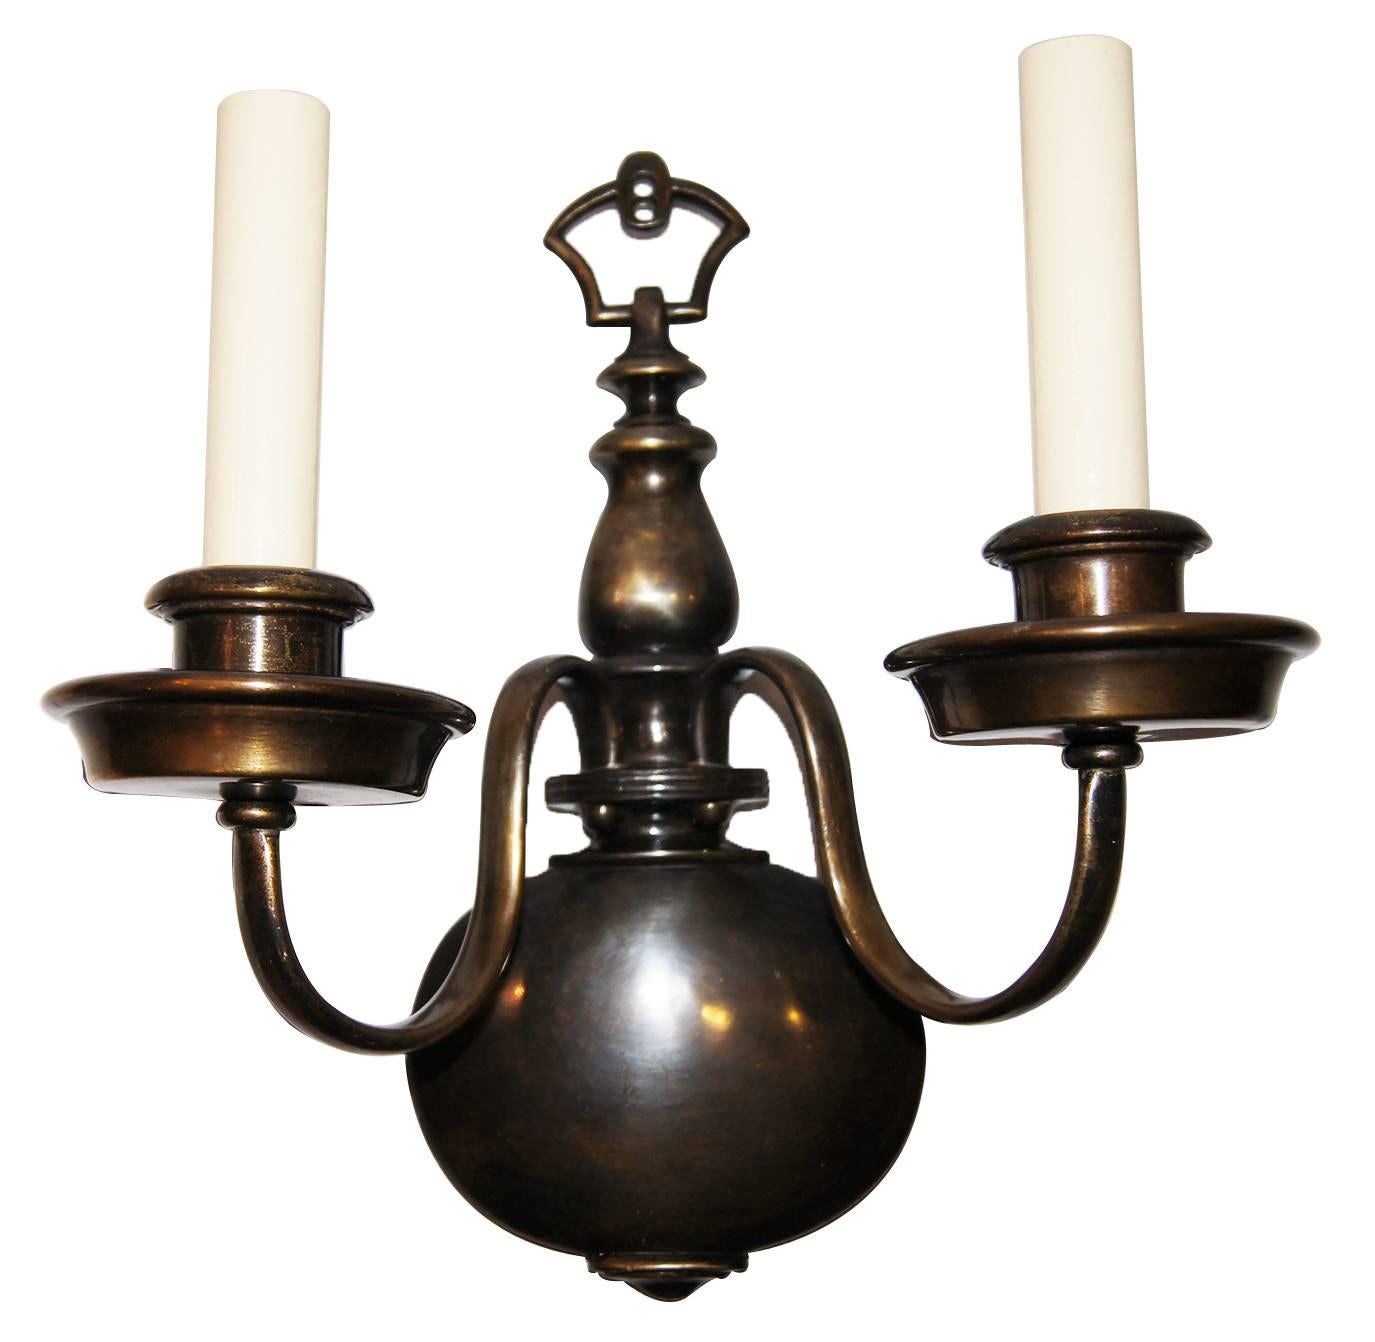 Set of four patinated bronze double light bronze sconces, Dutch style with original patina.